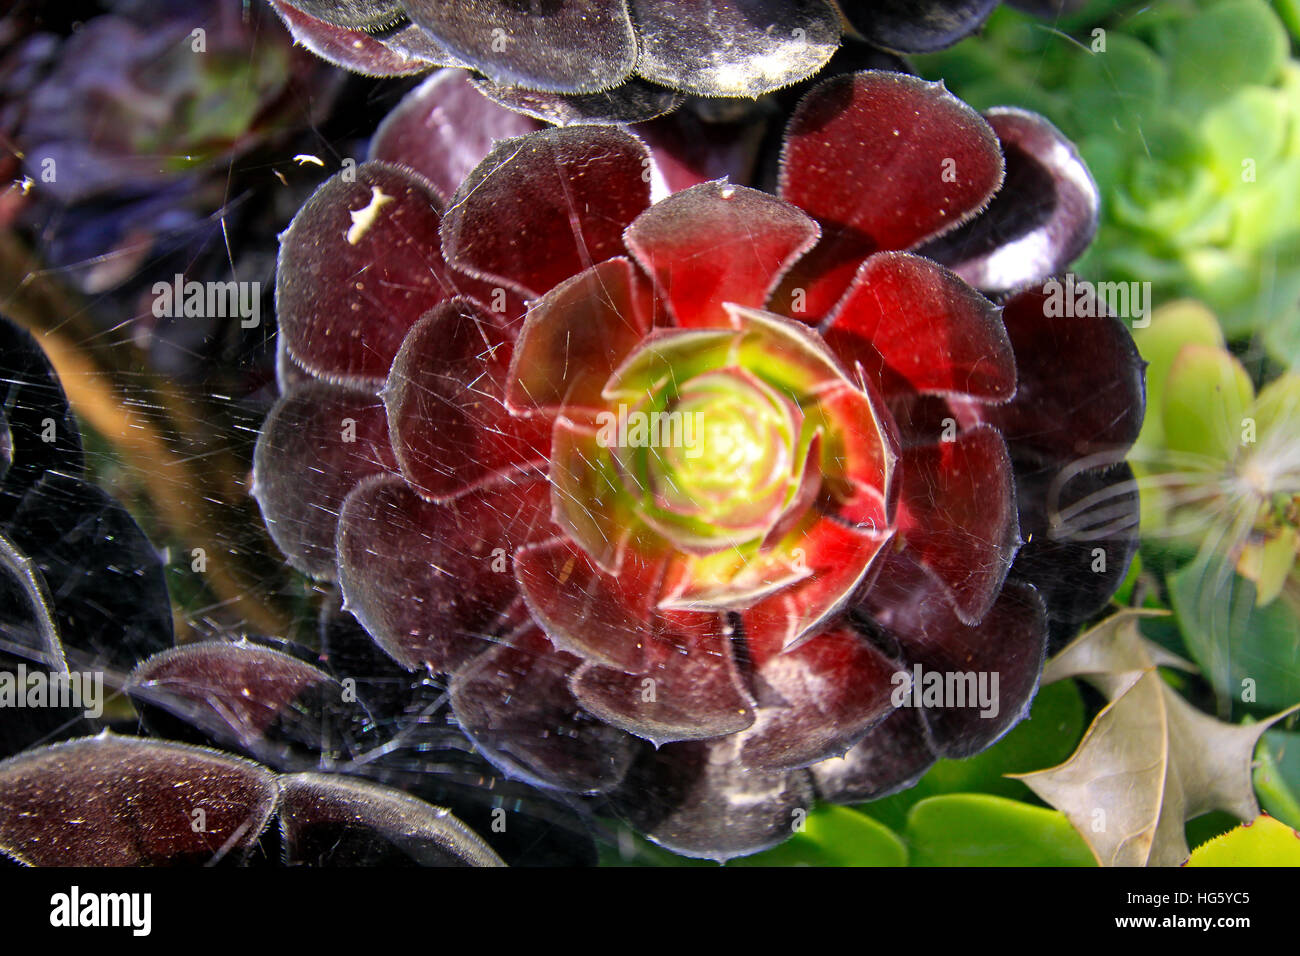 Dettaglio macro primo piano Aeonium Arboreum Black Rose Flower. Larnach Castle, Giardino Botanico Vittoriano, Penisola di Otago, nuova Zelanda Foto Stock